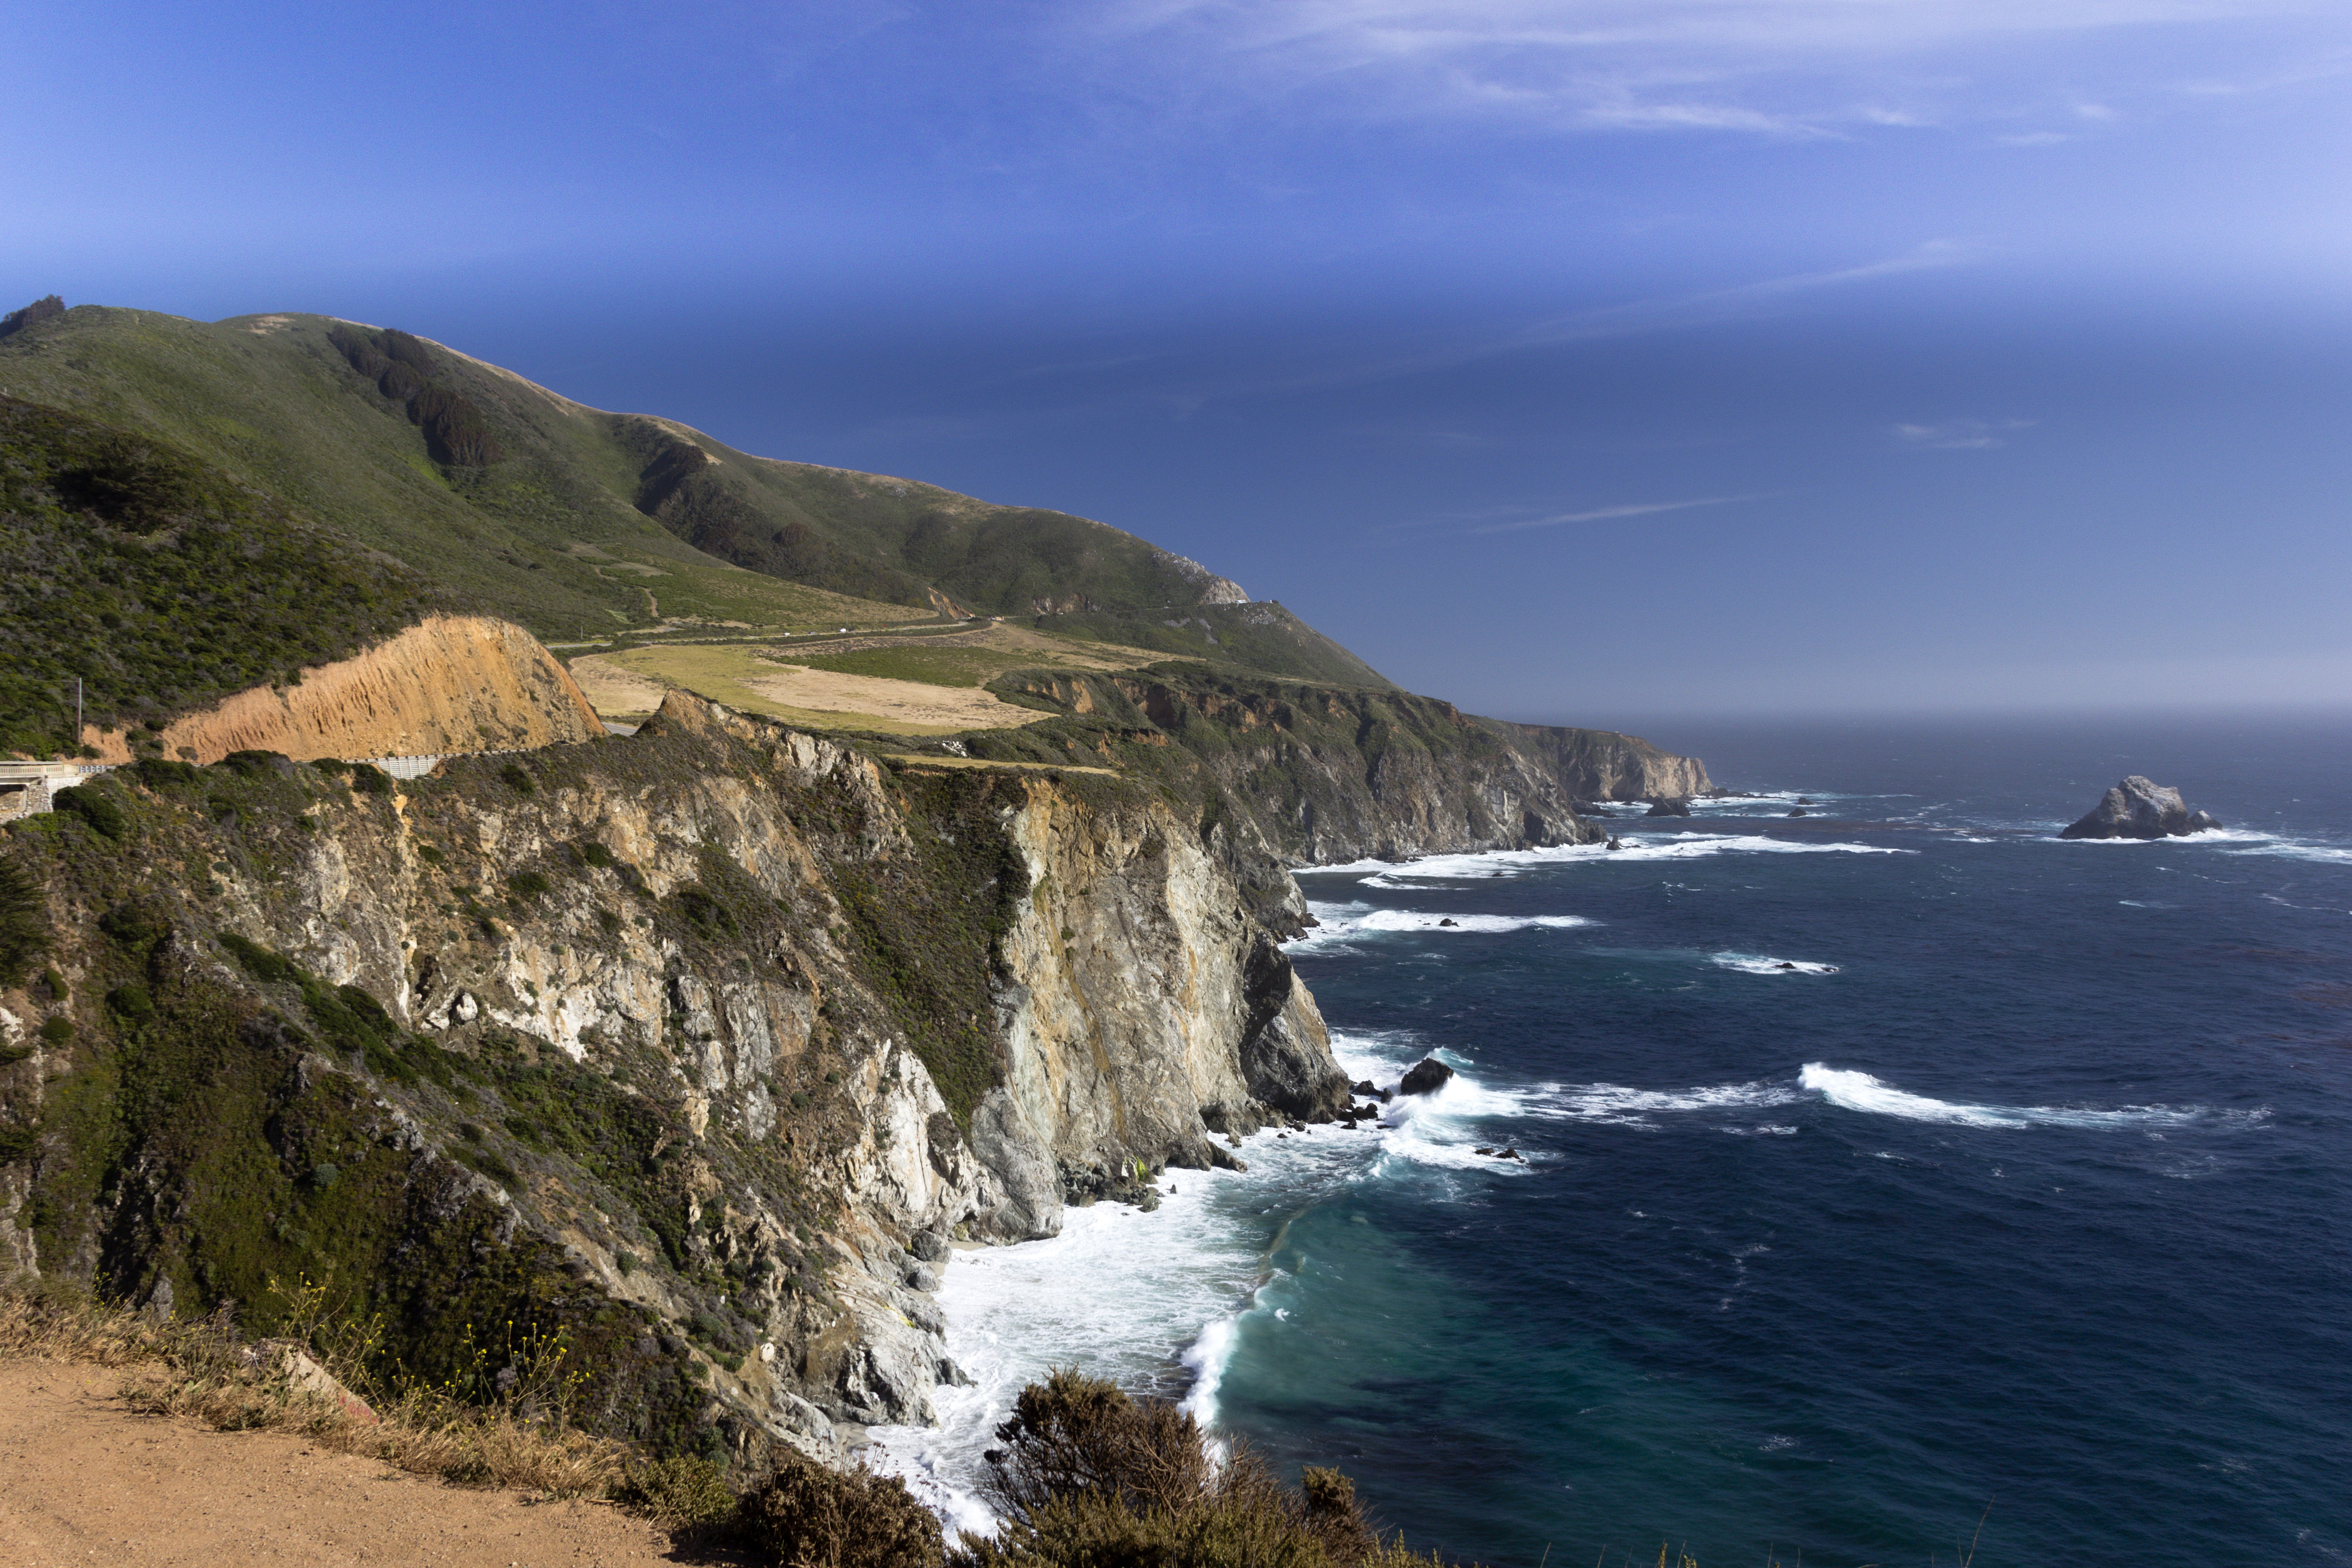 Coastal landscape and scenery in California image - Free stock photo -  Public Domain photo - CC0 Images